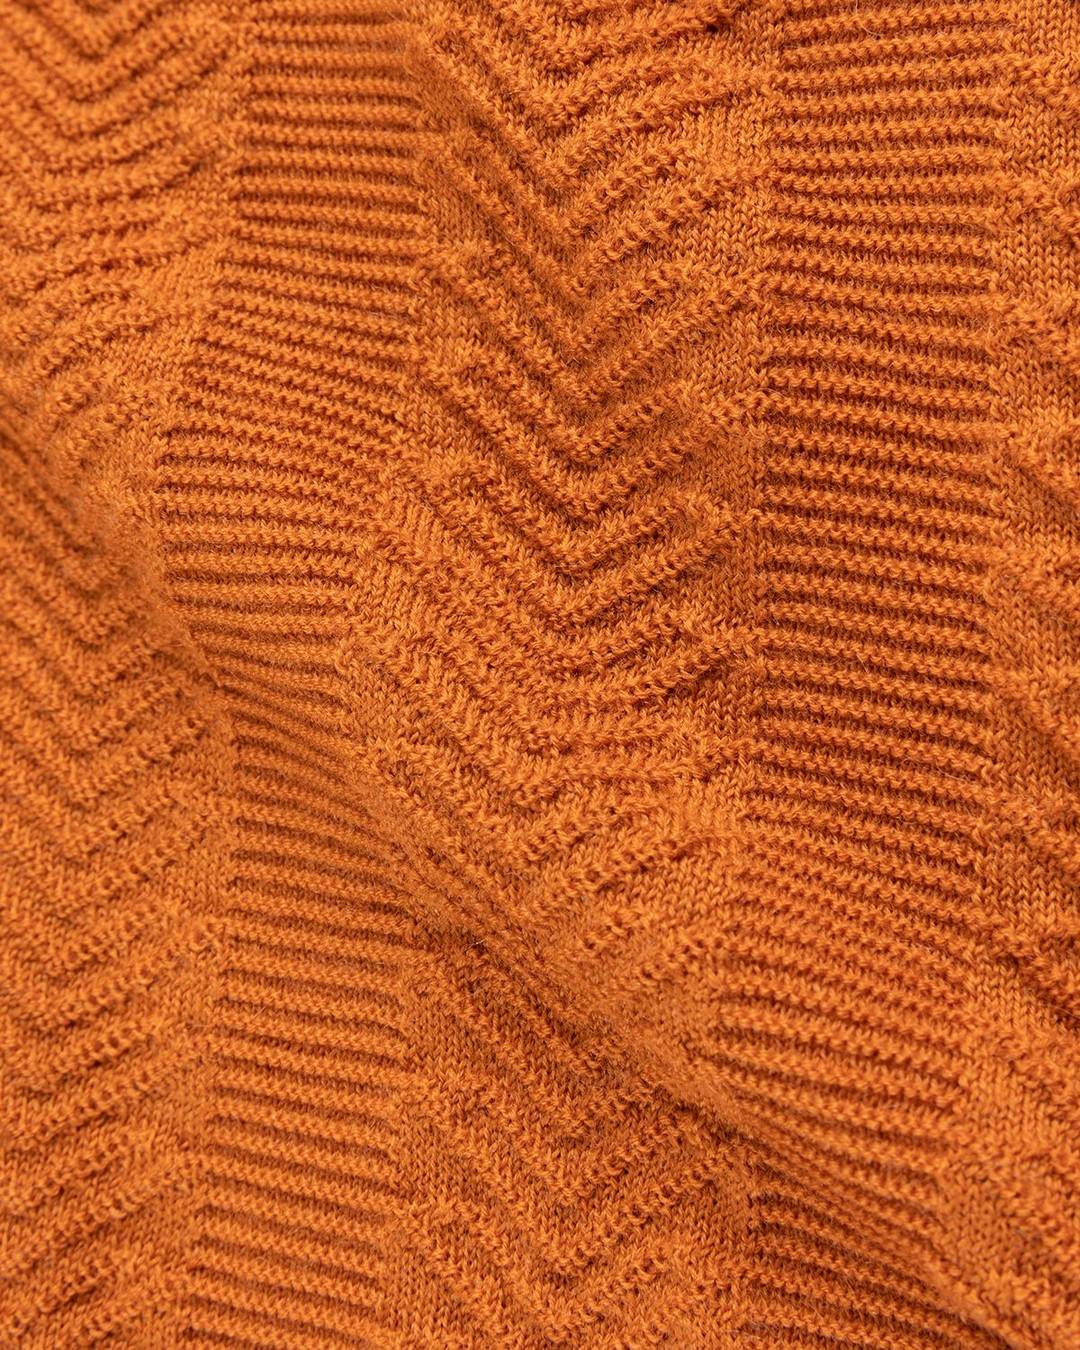 Adidas x Wales Bonner – Knit Longsleeve - V-Necks Knitwear - Orange - Image 5